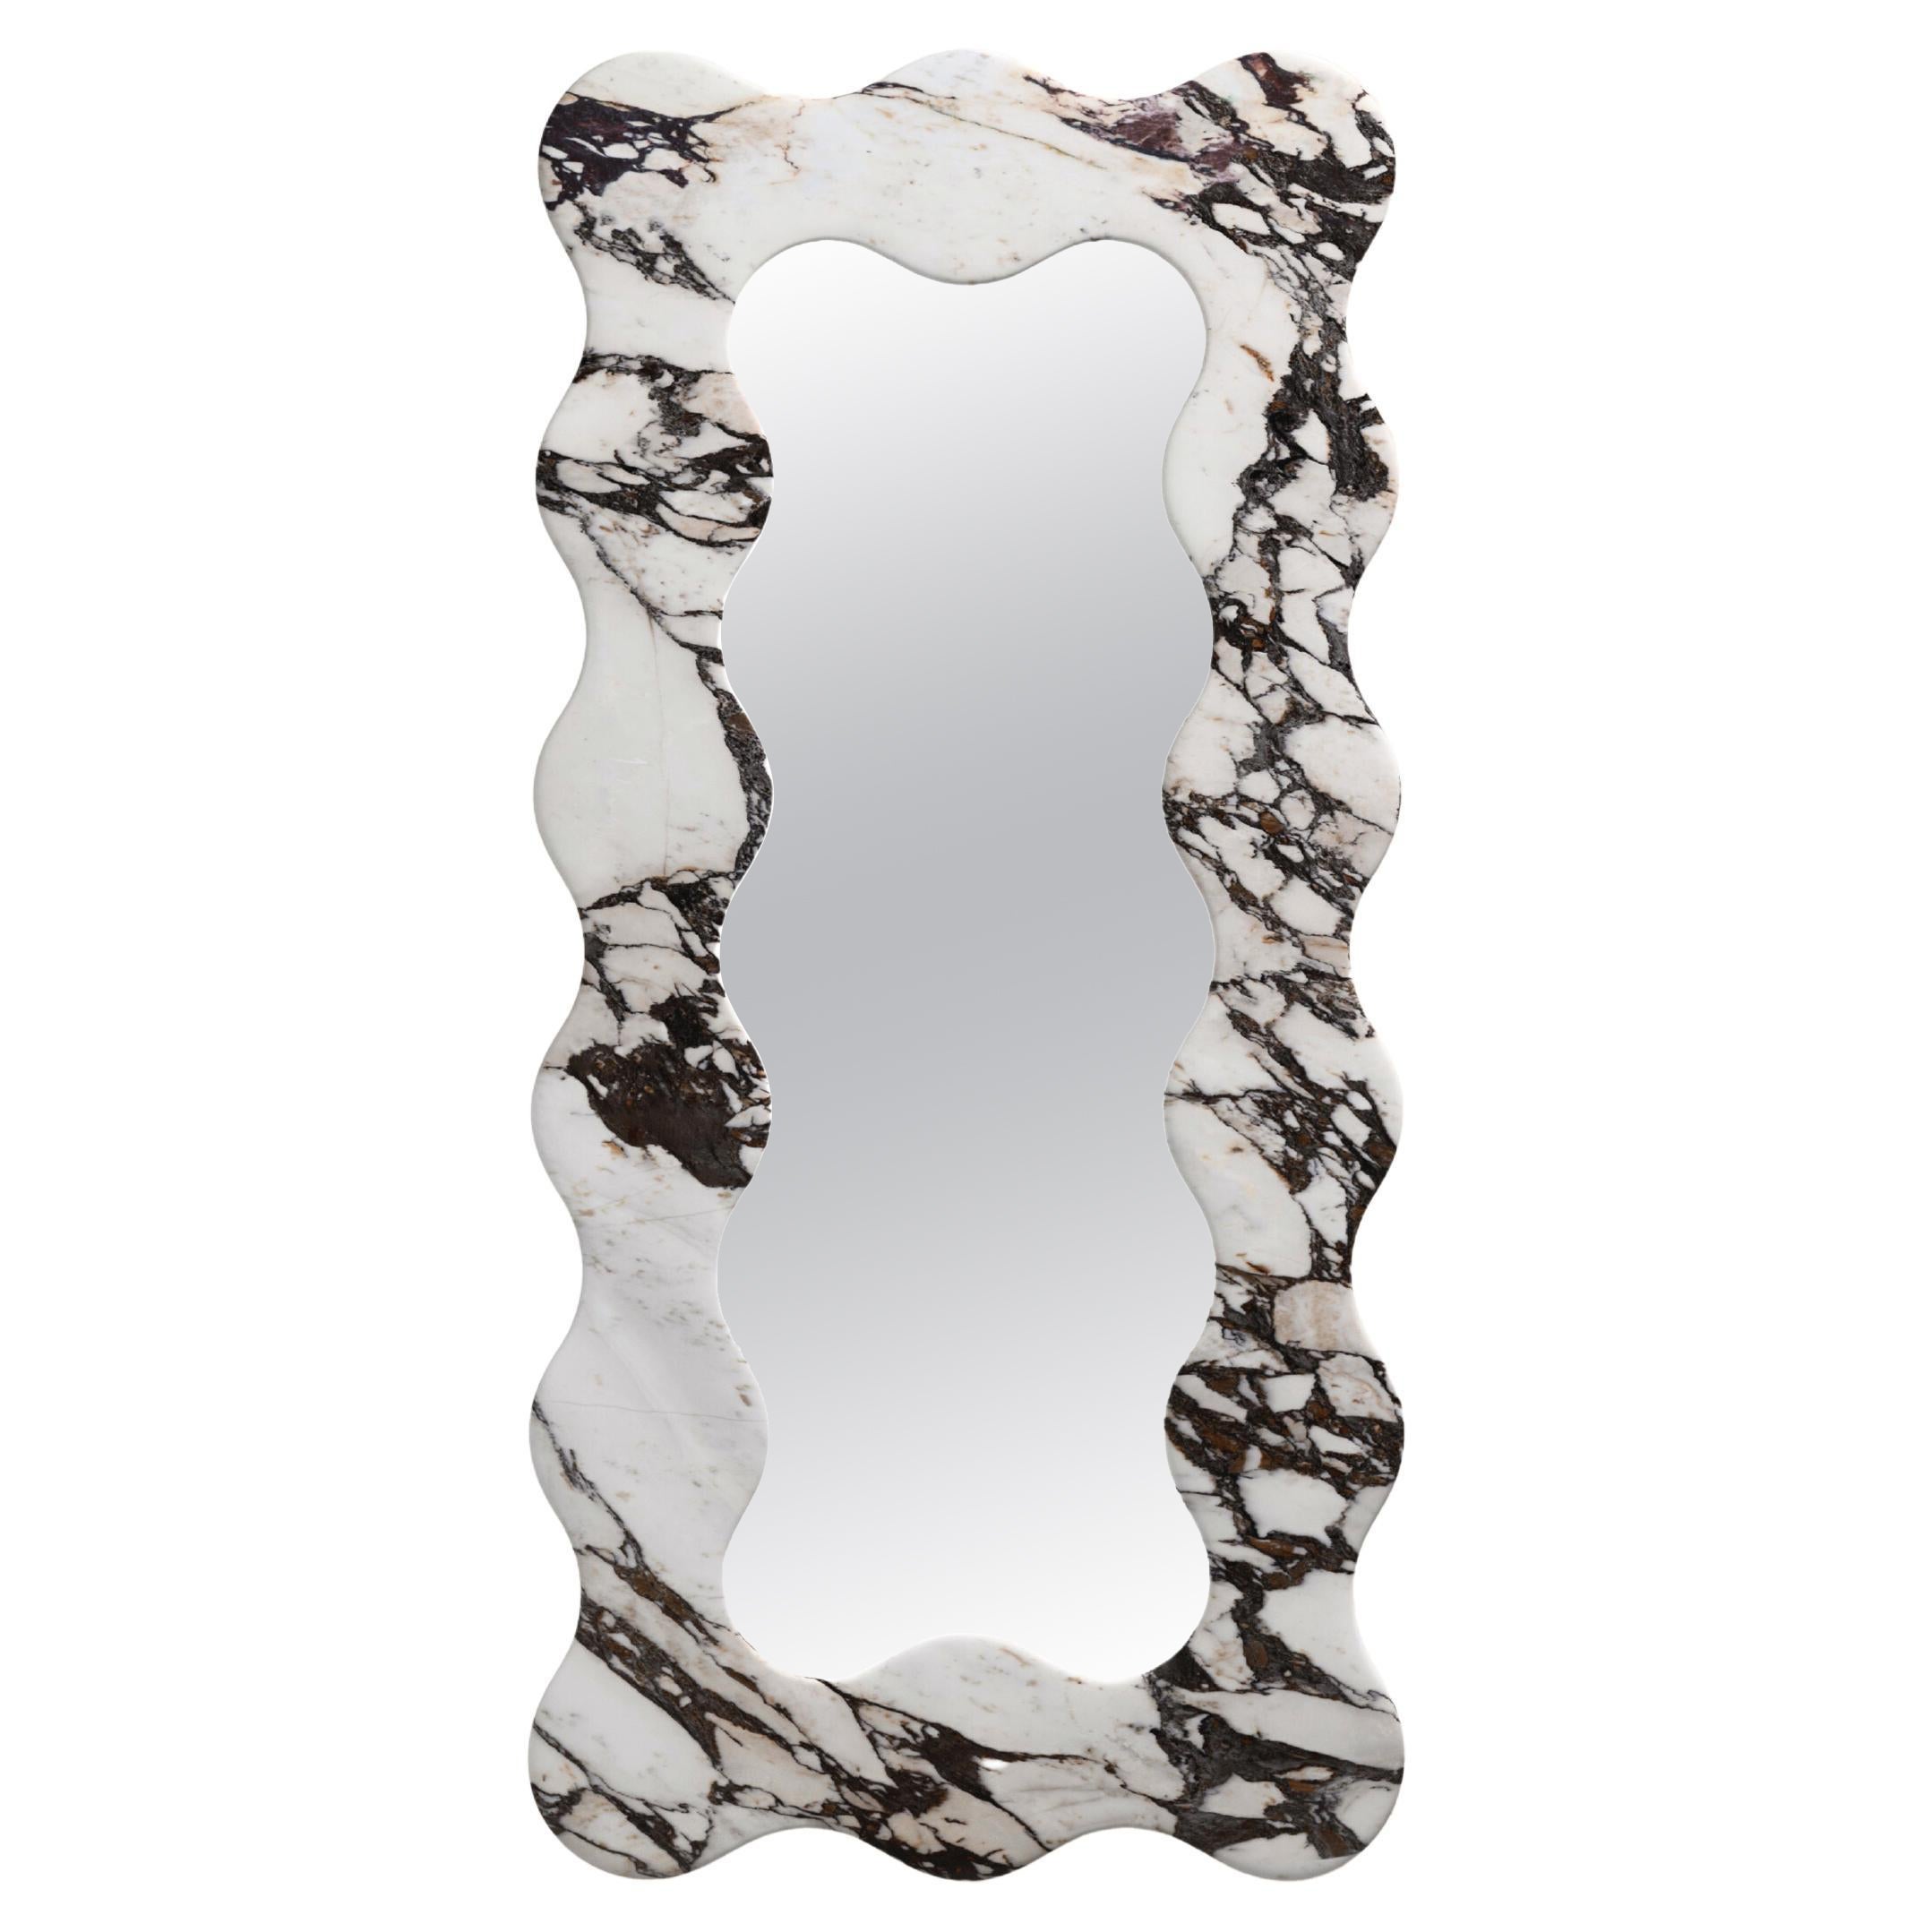 FORM(LA) Palla Floor Mirror 87"H x 42"W x 1.5"D Calacatta Viola Marble For Sale